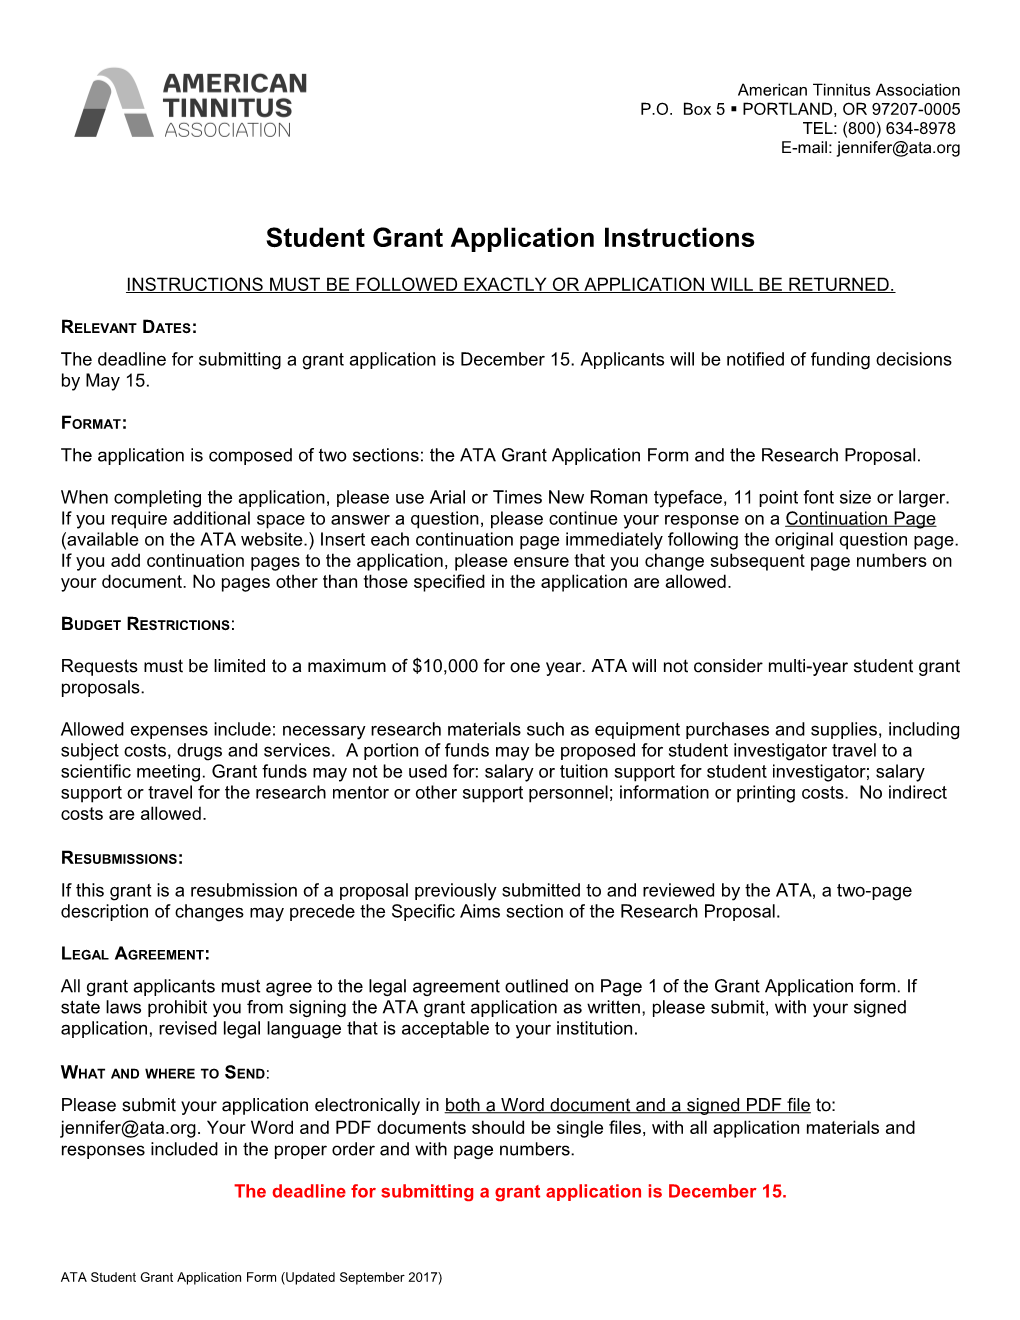 ATA Student Grant Application